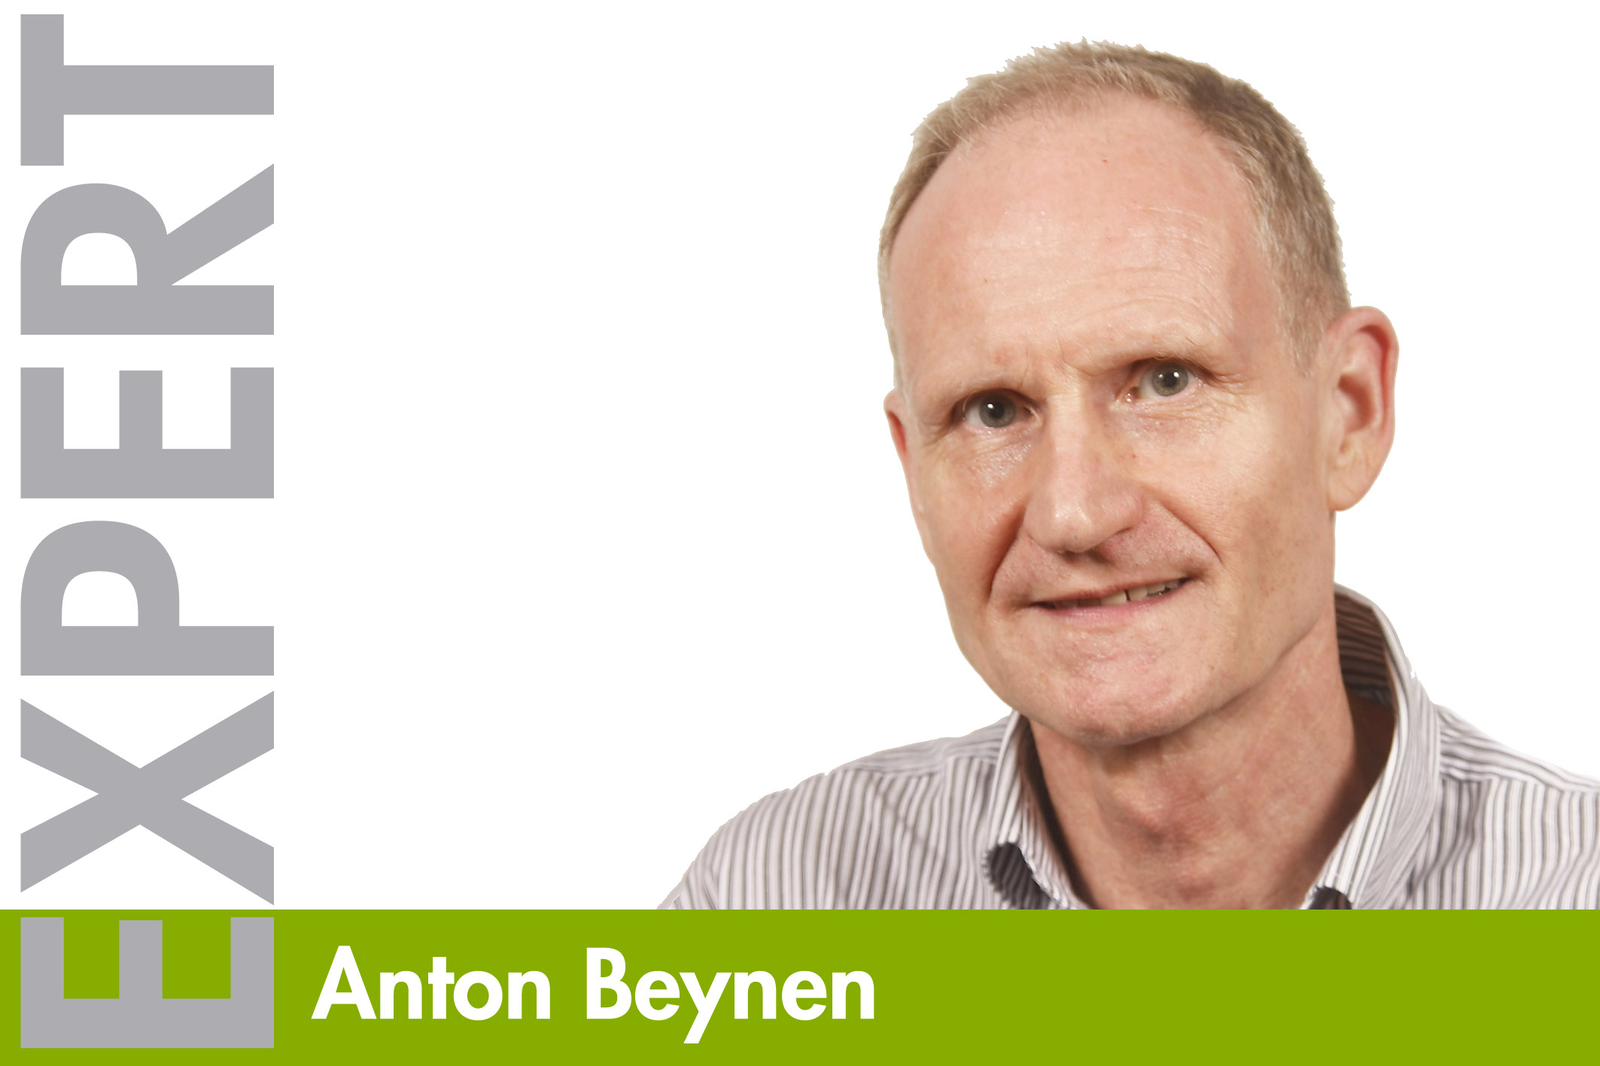 Anton Beynen, petfood development